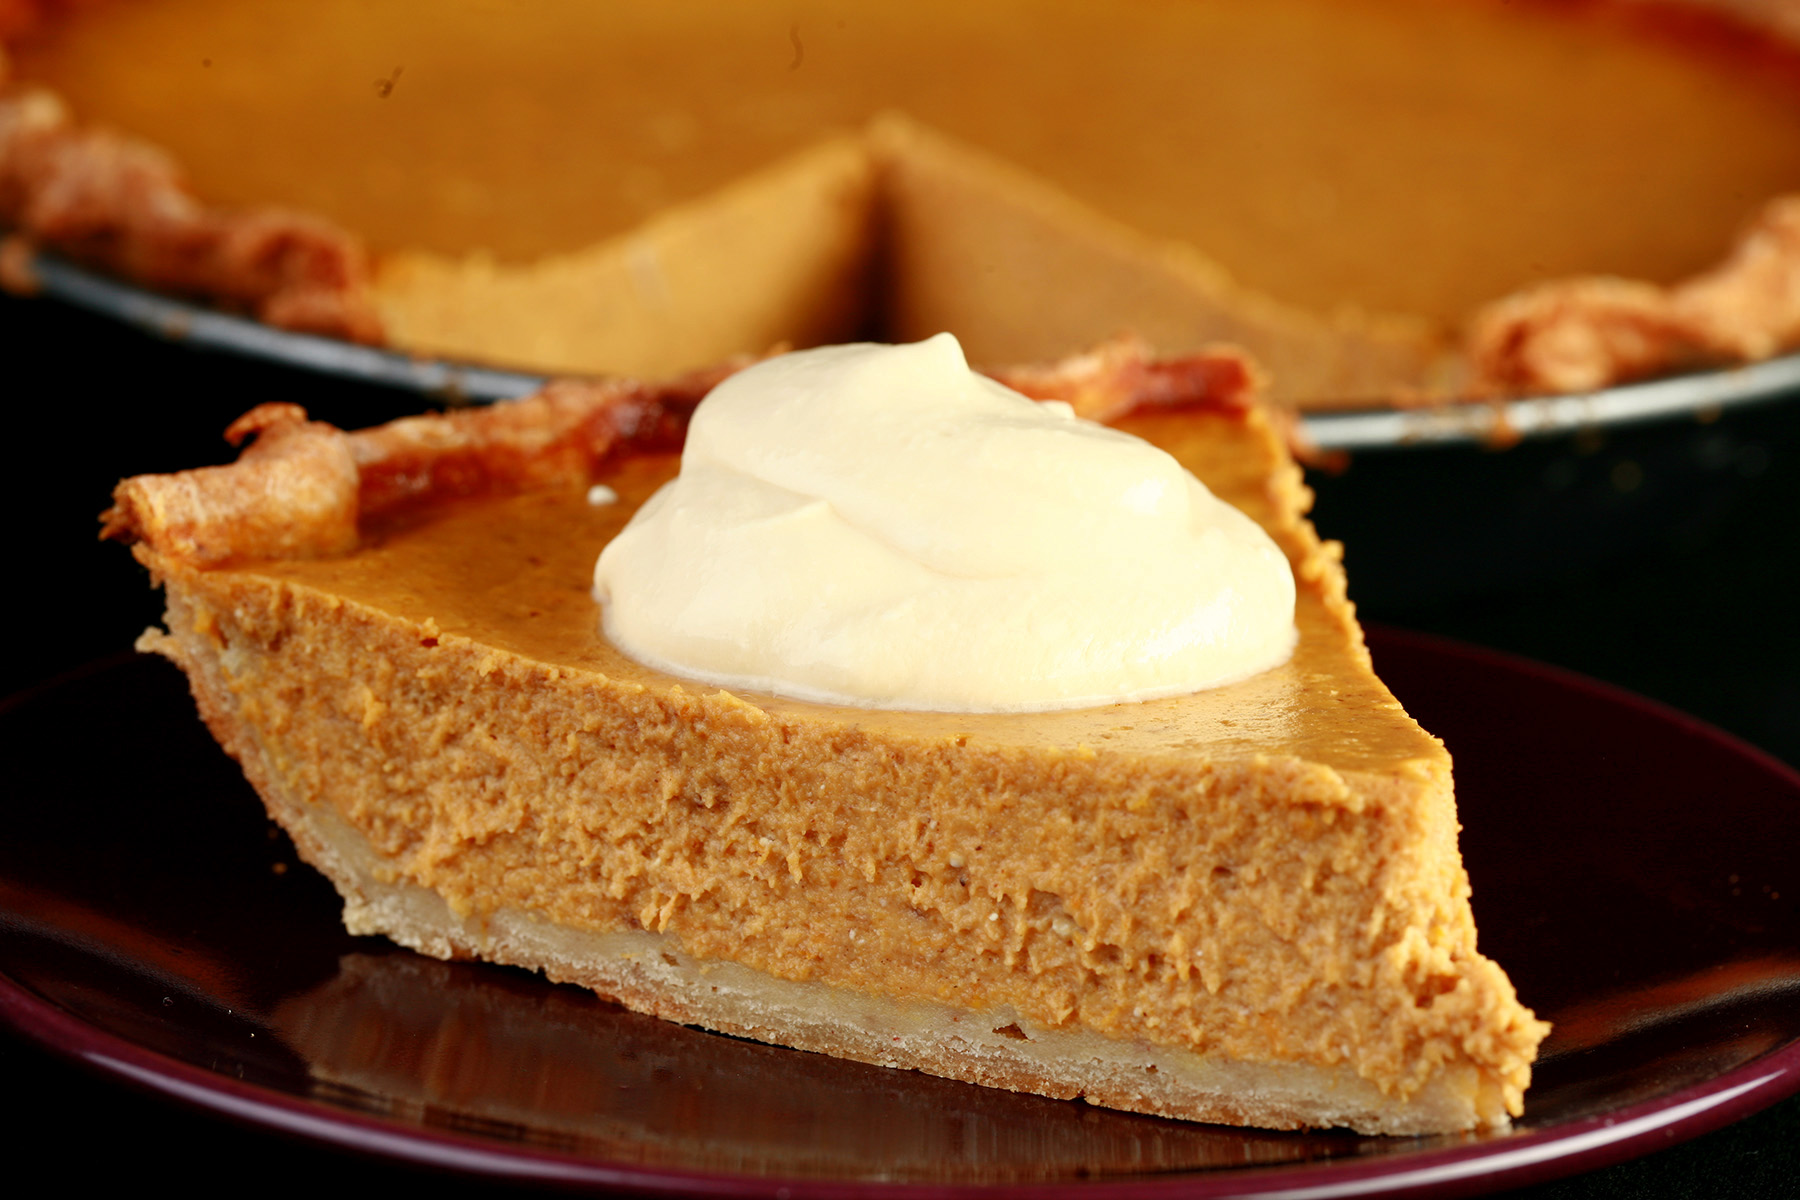 A slice of gluten-free maple pumpkin pie with maple cream, in front of a whole pumpkin pie.